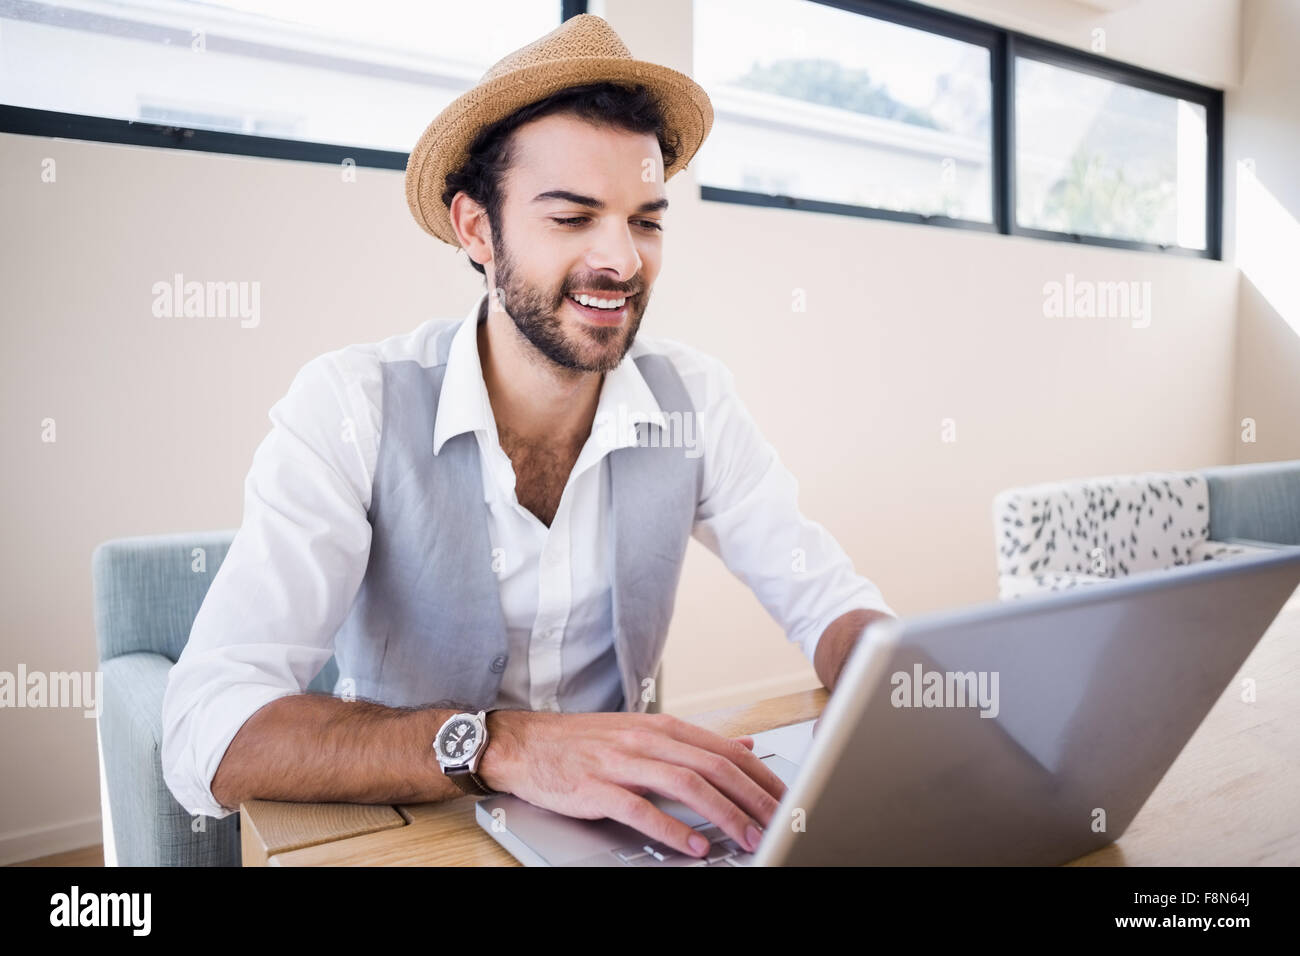 Smiling man using laptop Banque D'Images